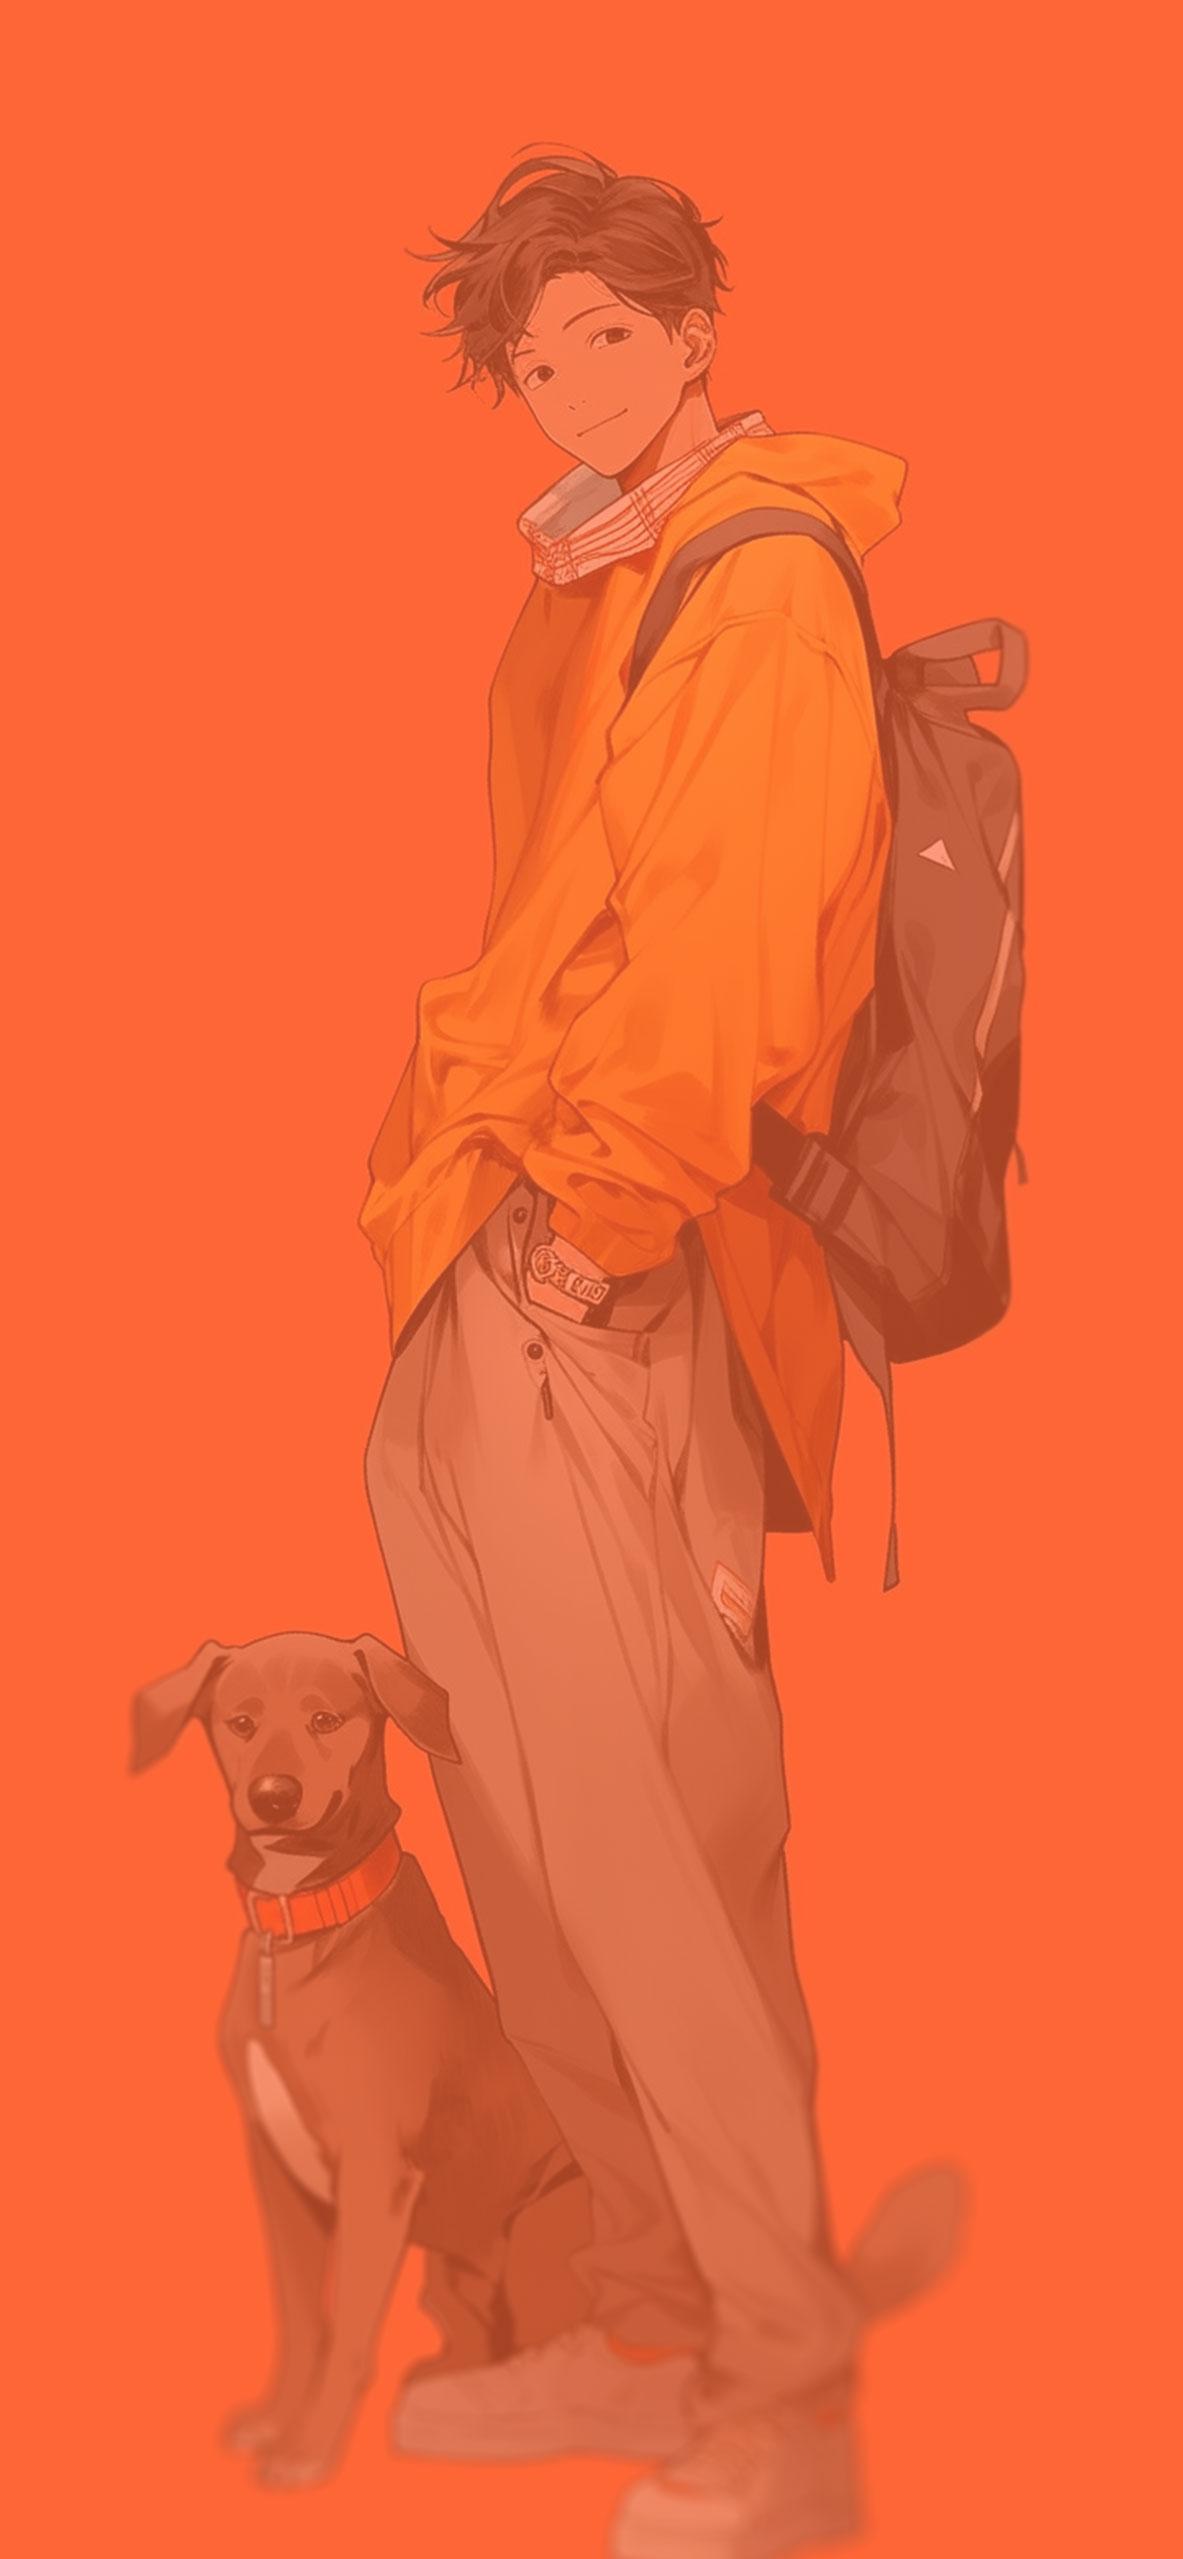 Anime Boy with Dog Orange Wallpaper   Cute Anime Boy Wallpaper